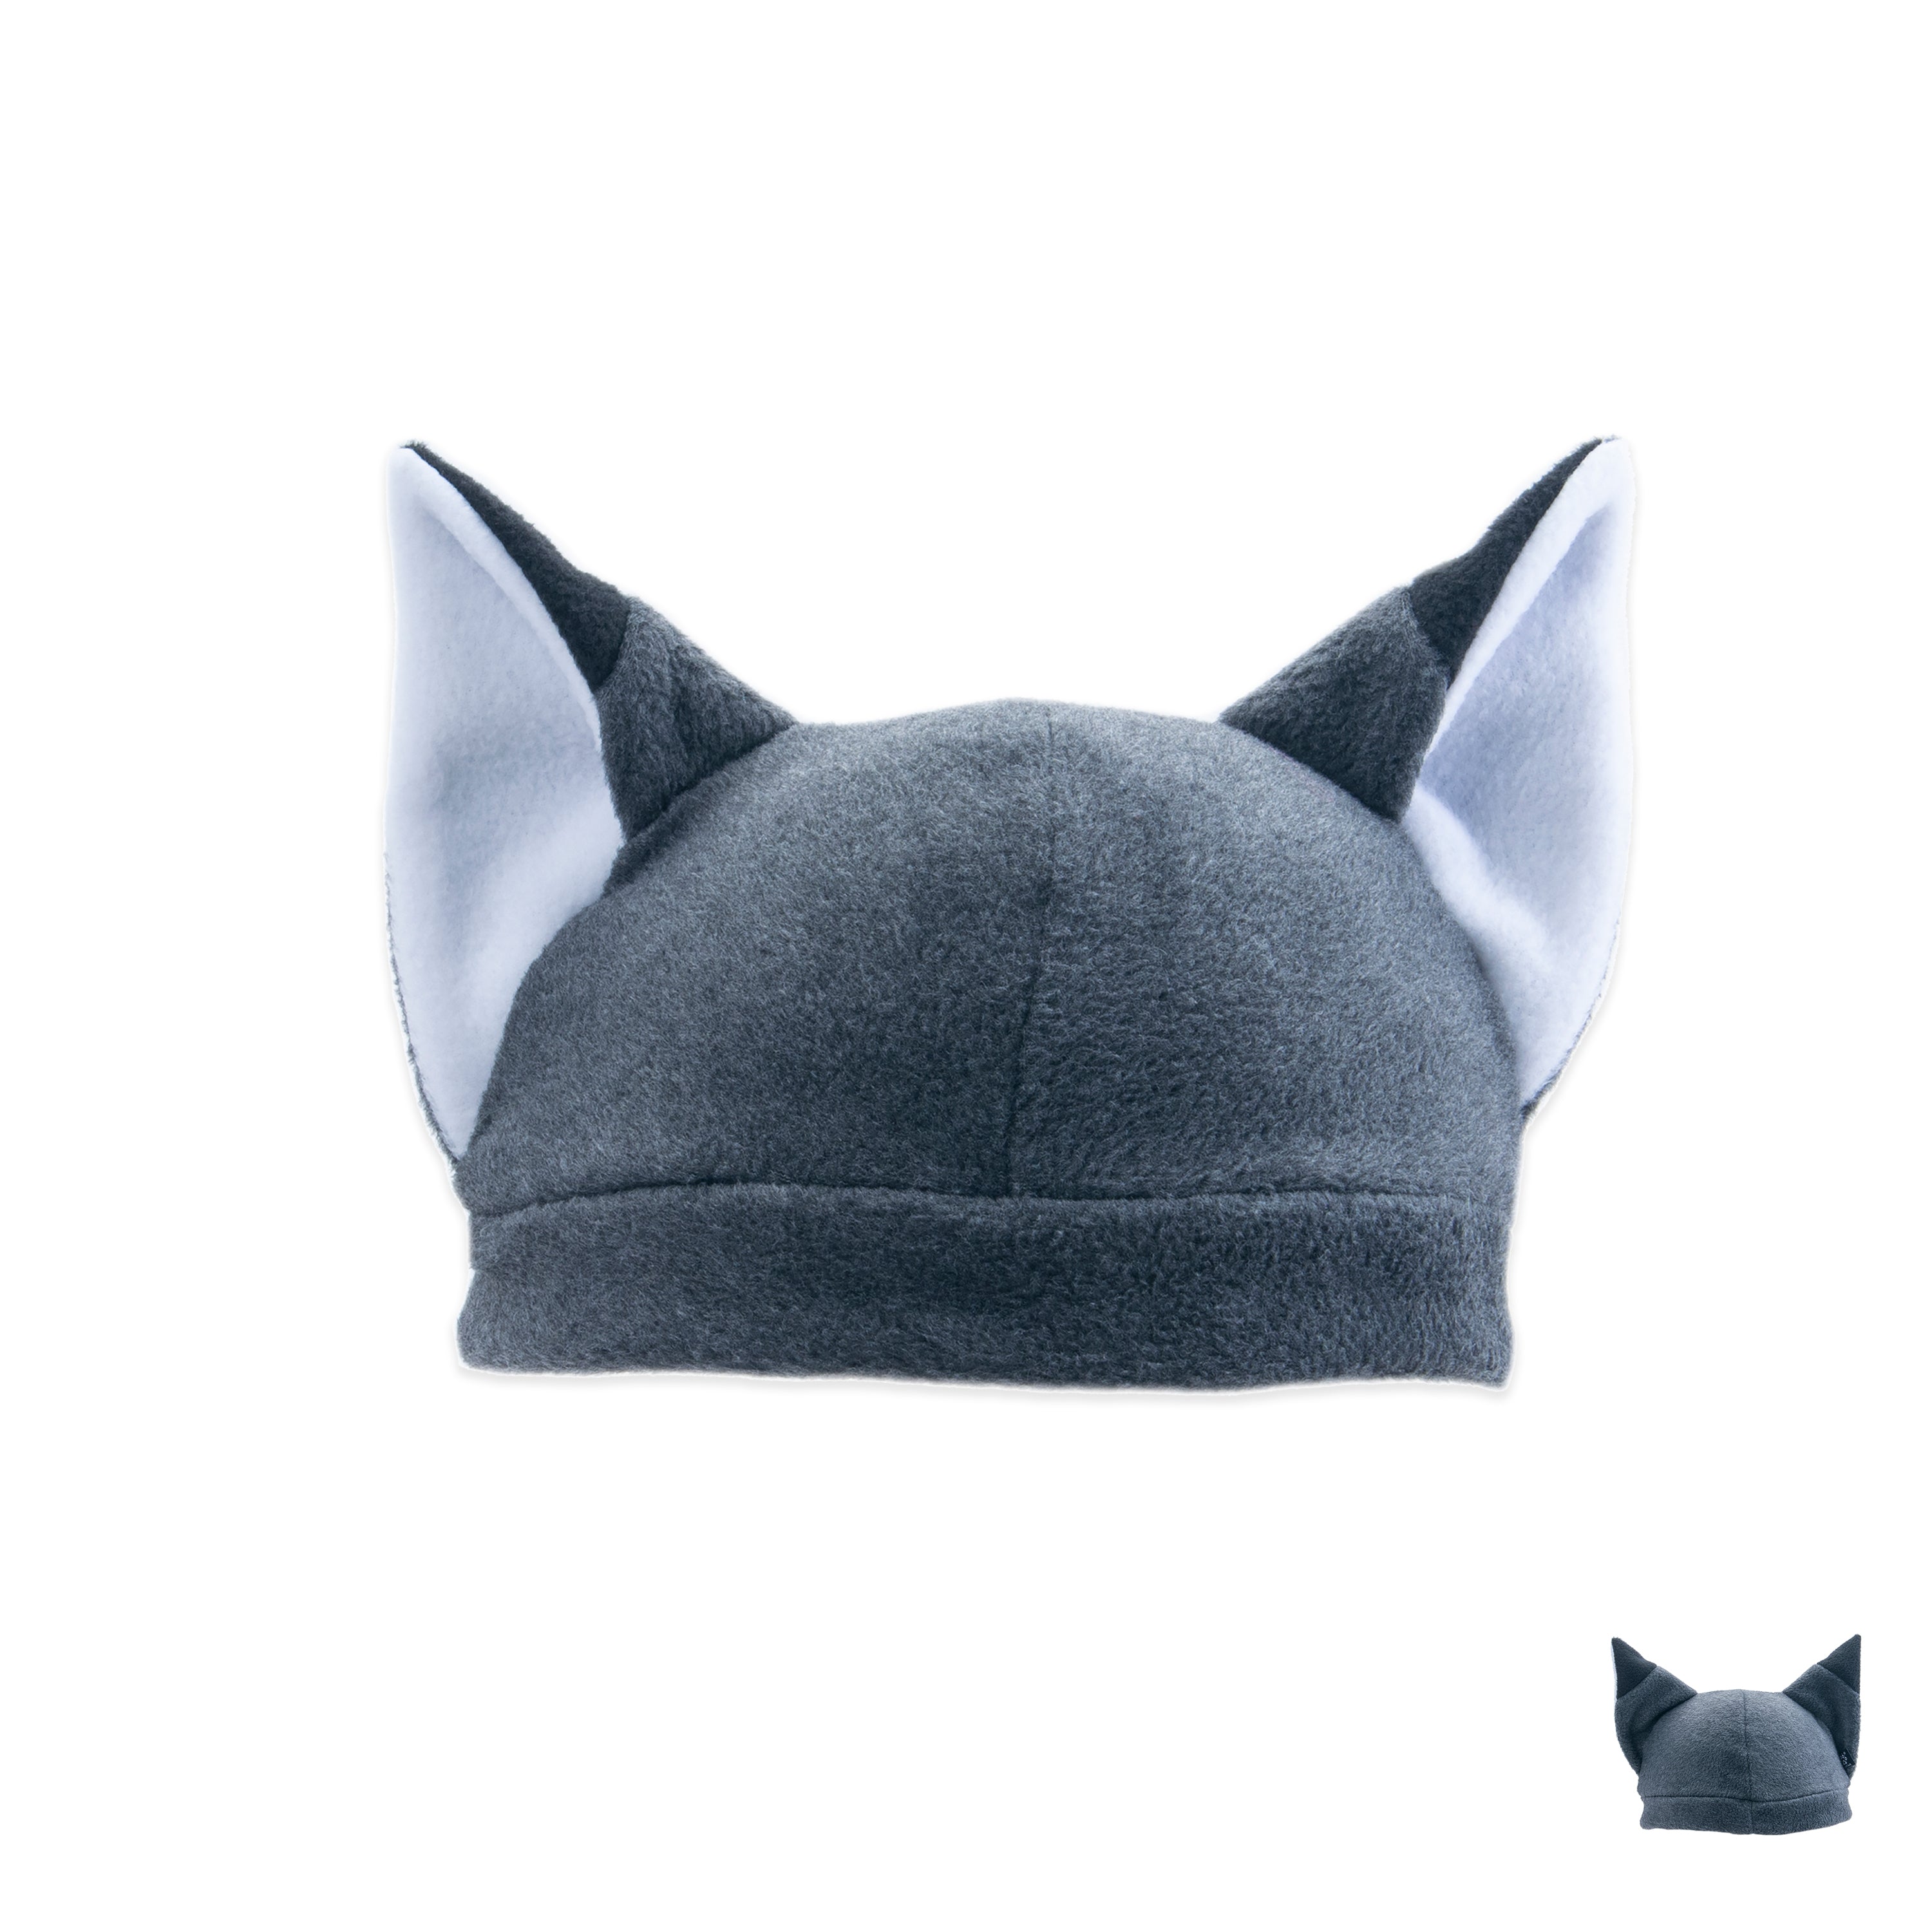 Pawstar Fleece Fox Hat for partial fursuit, furry cosplay, or halloween costume